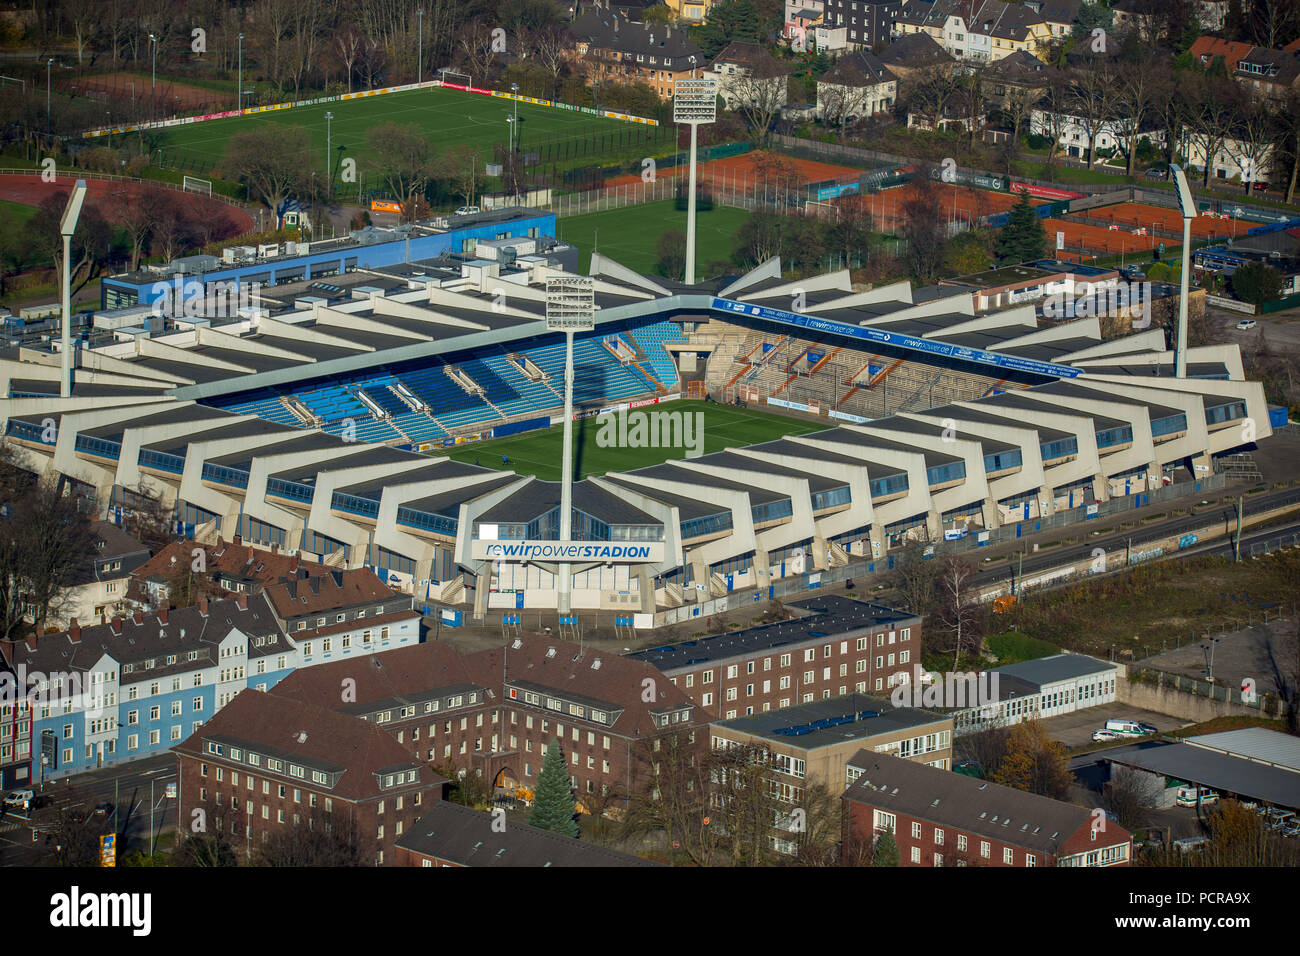 Rewirpower Stadium, Ruhrstadion of VfL-Bochum, Bochum, Ruhr area, North Rhine-Westphalia, Germany Stock Photo